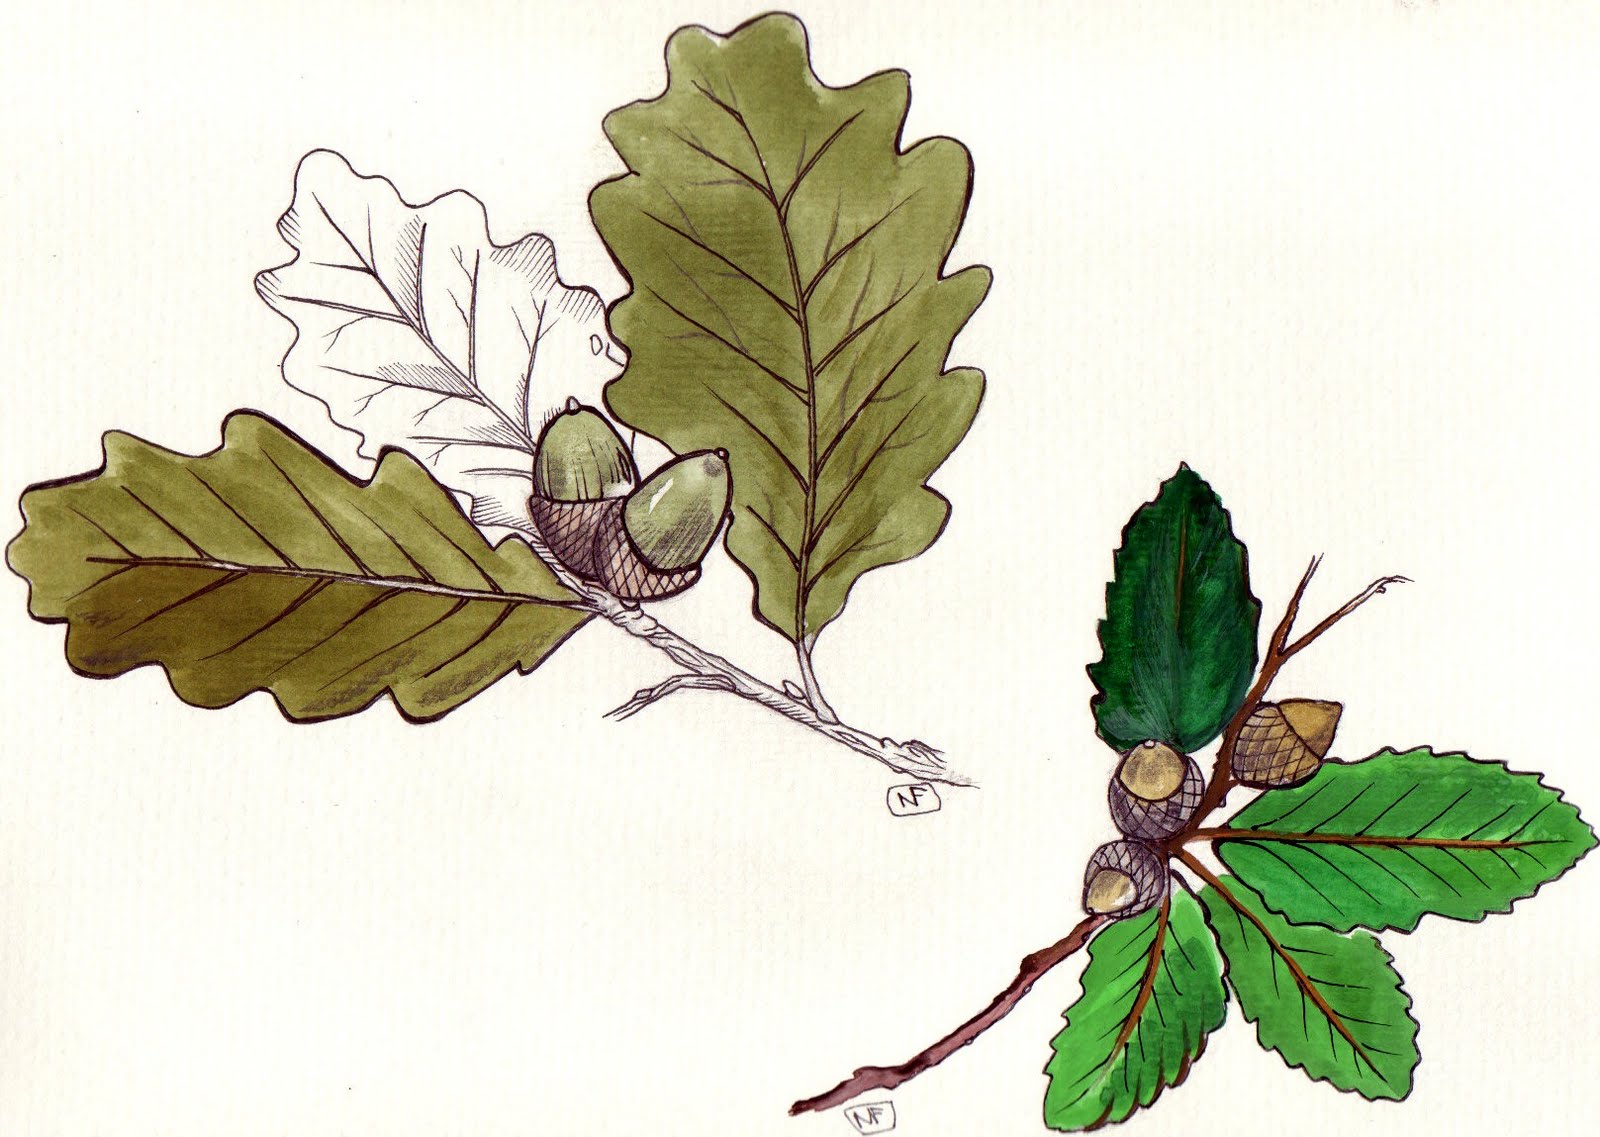 Nor Martin ilustracion: Dibujos sobre diferentes especies de 